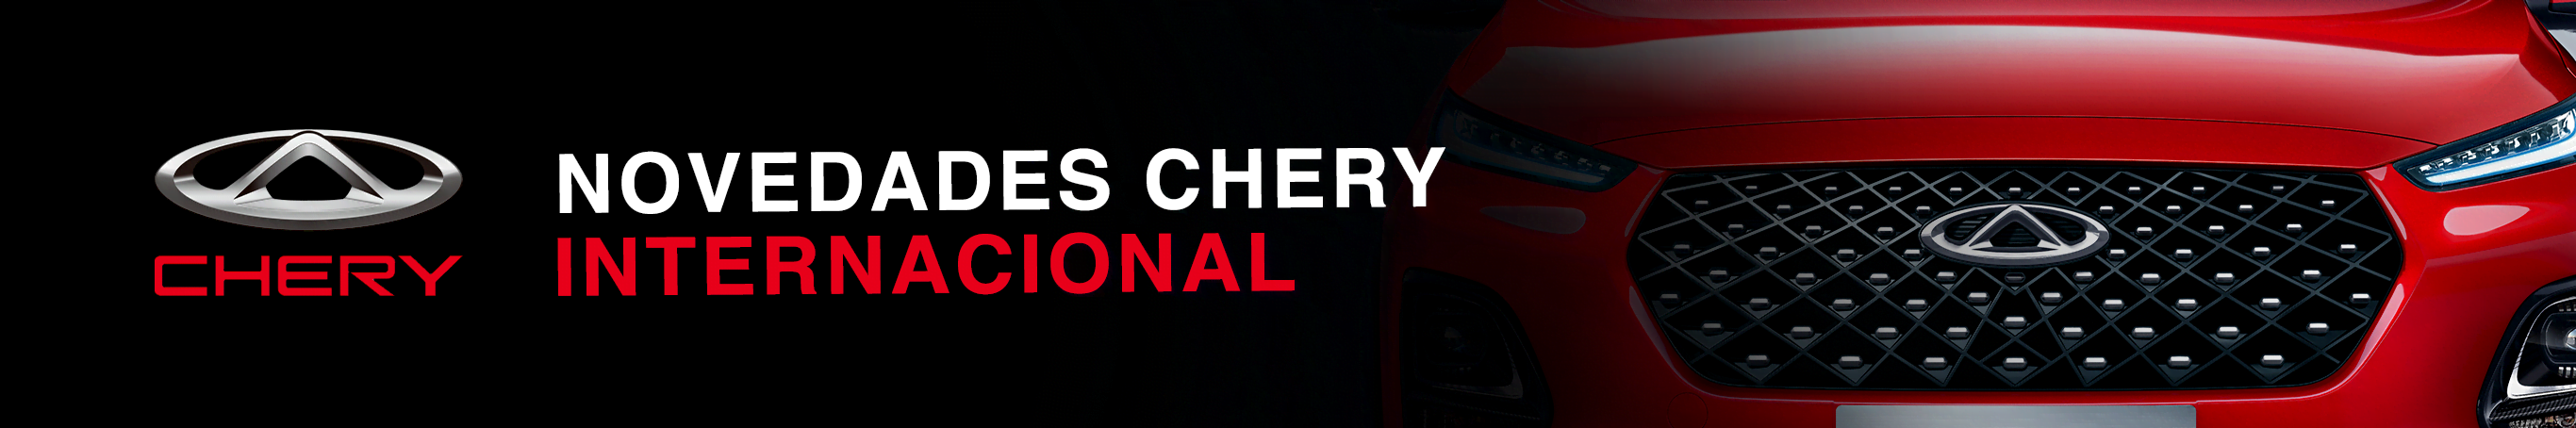 chery-internacional-novedades